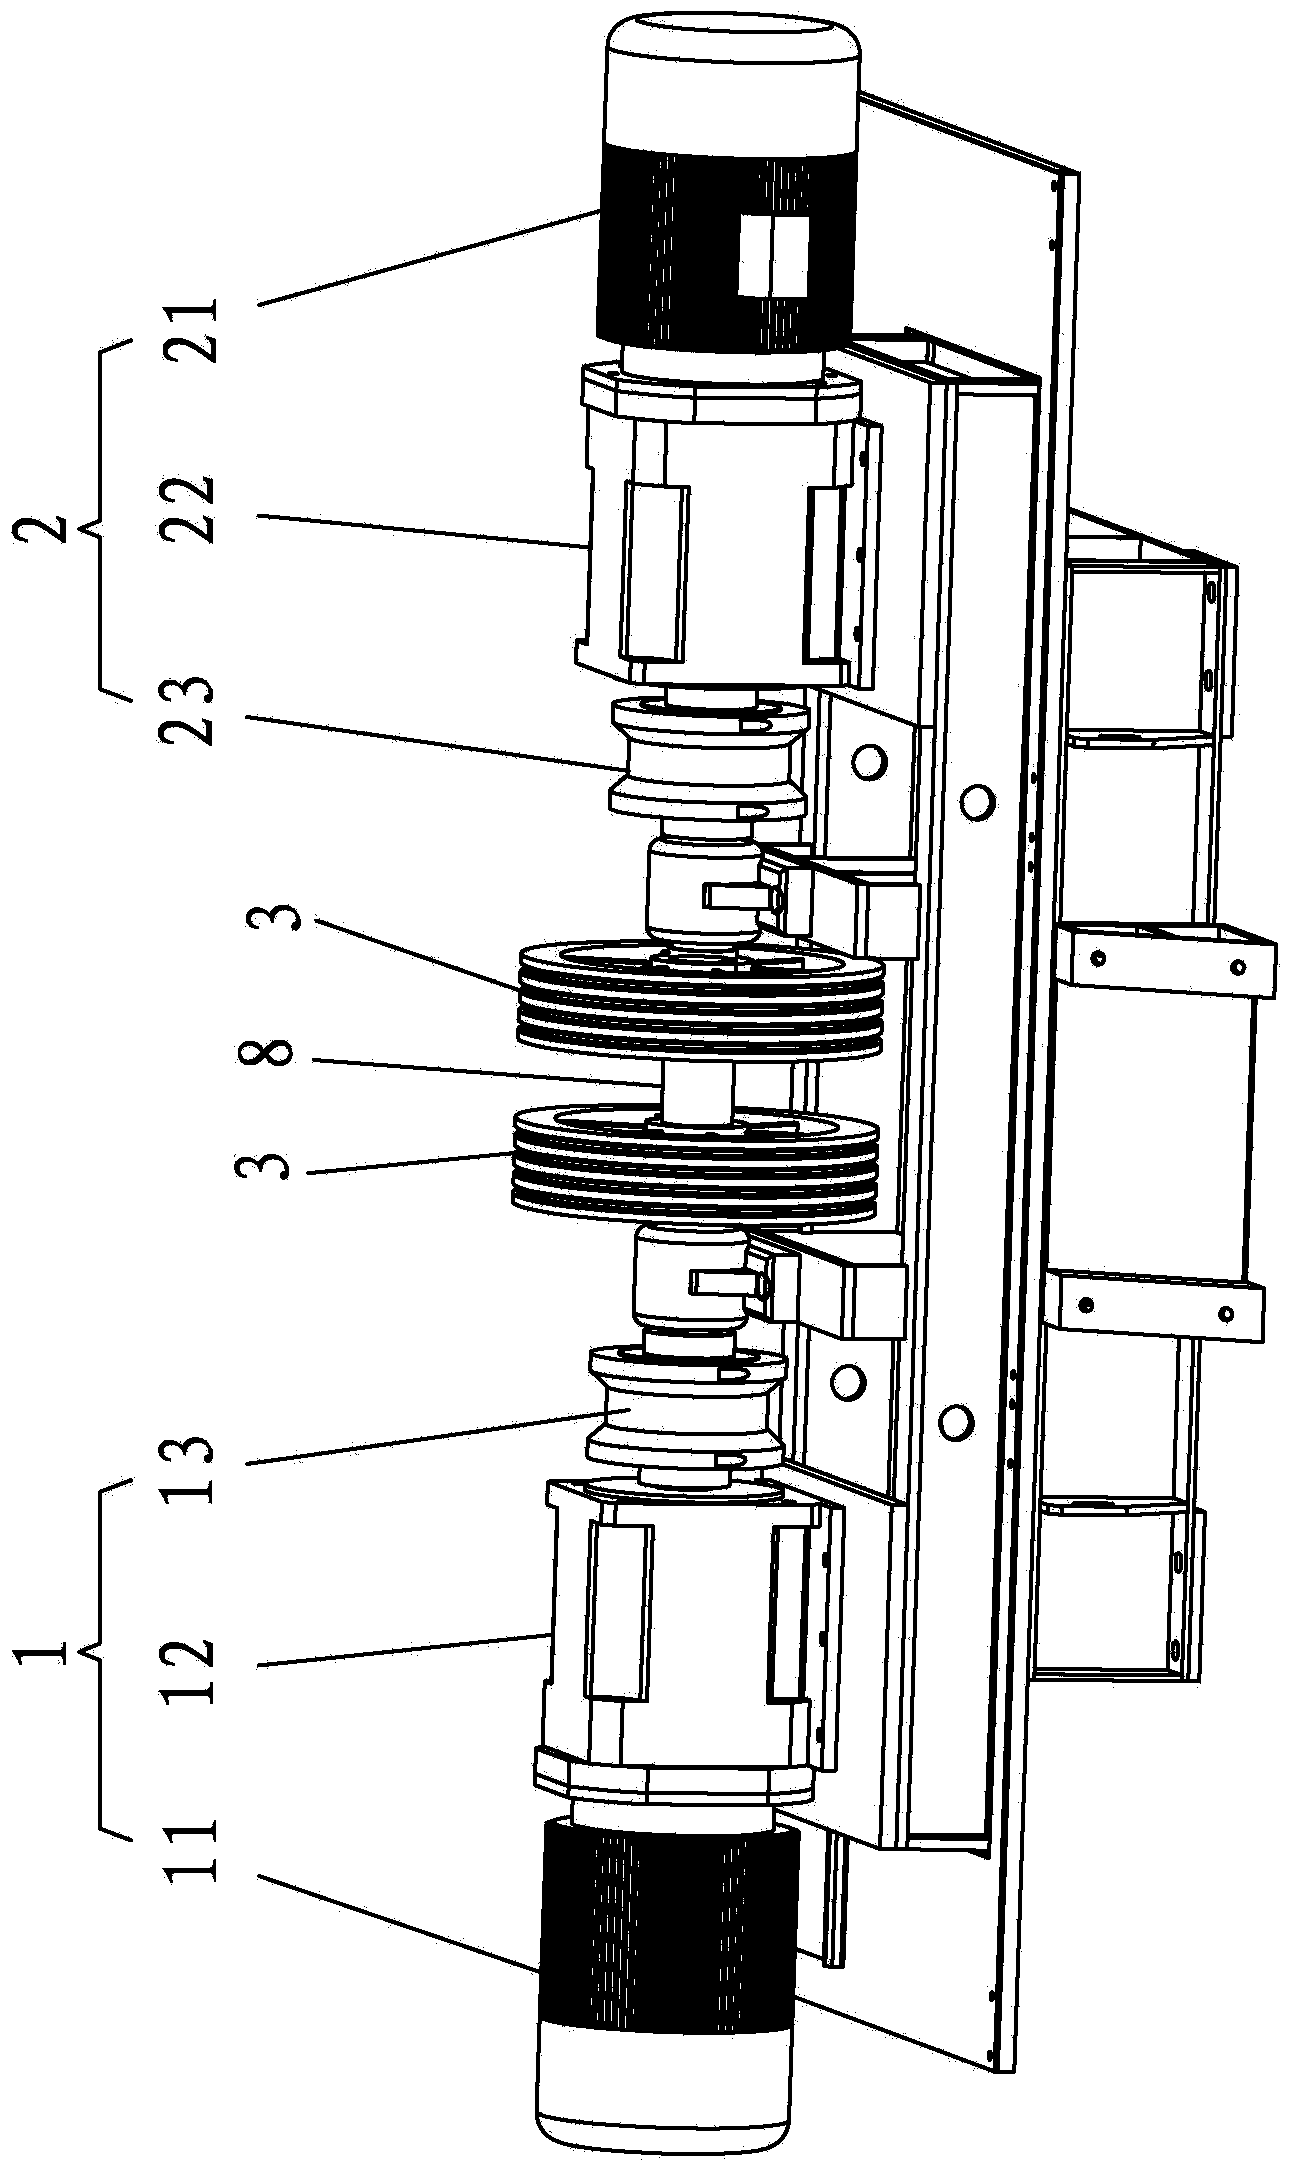 Double-drive mechanism of pumping unit